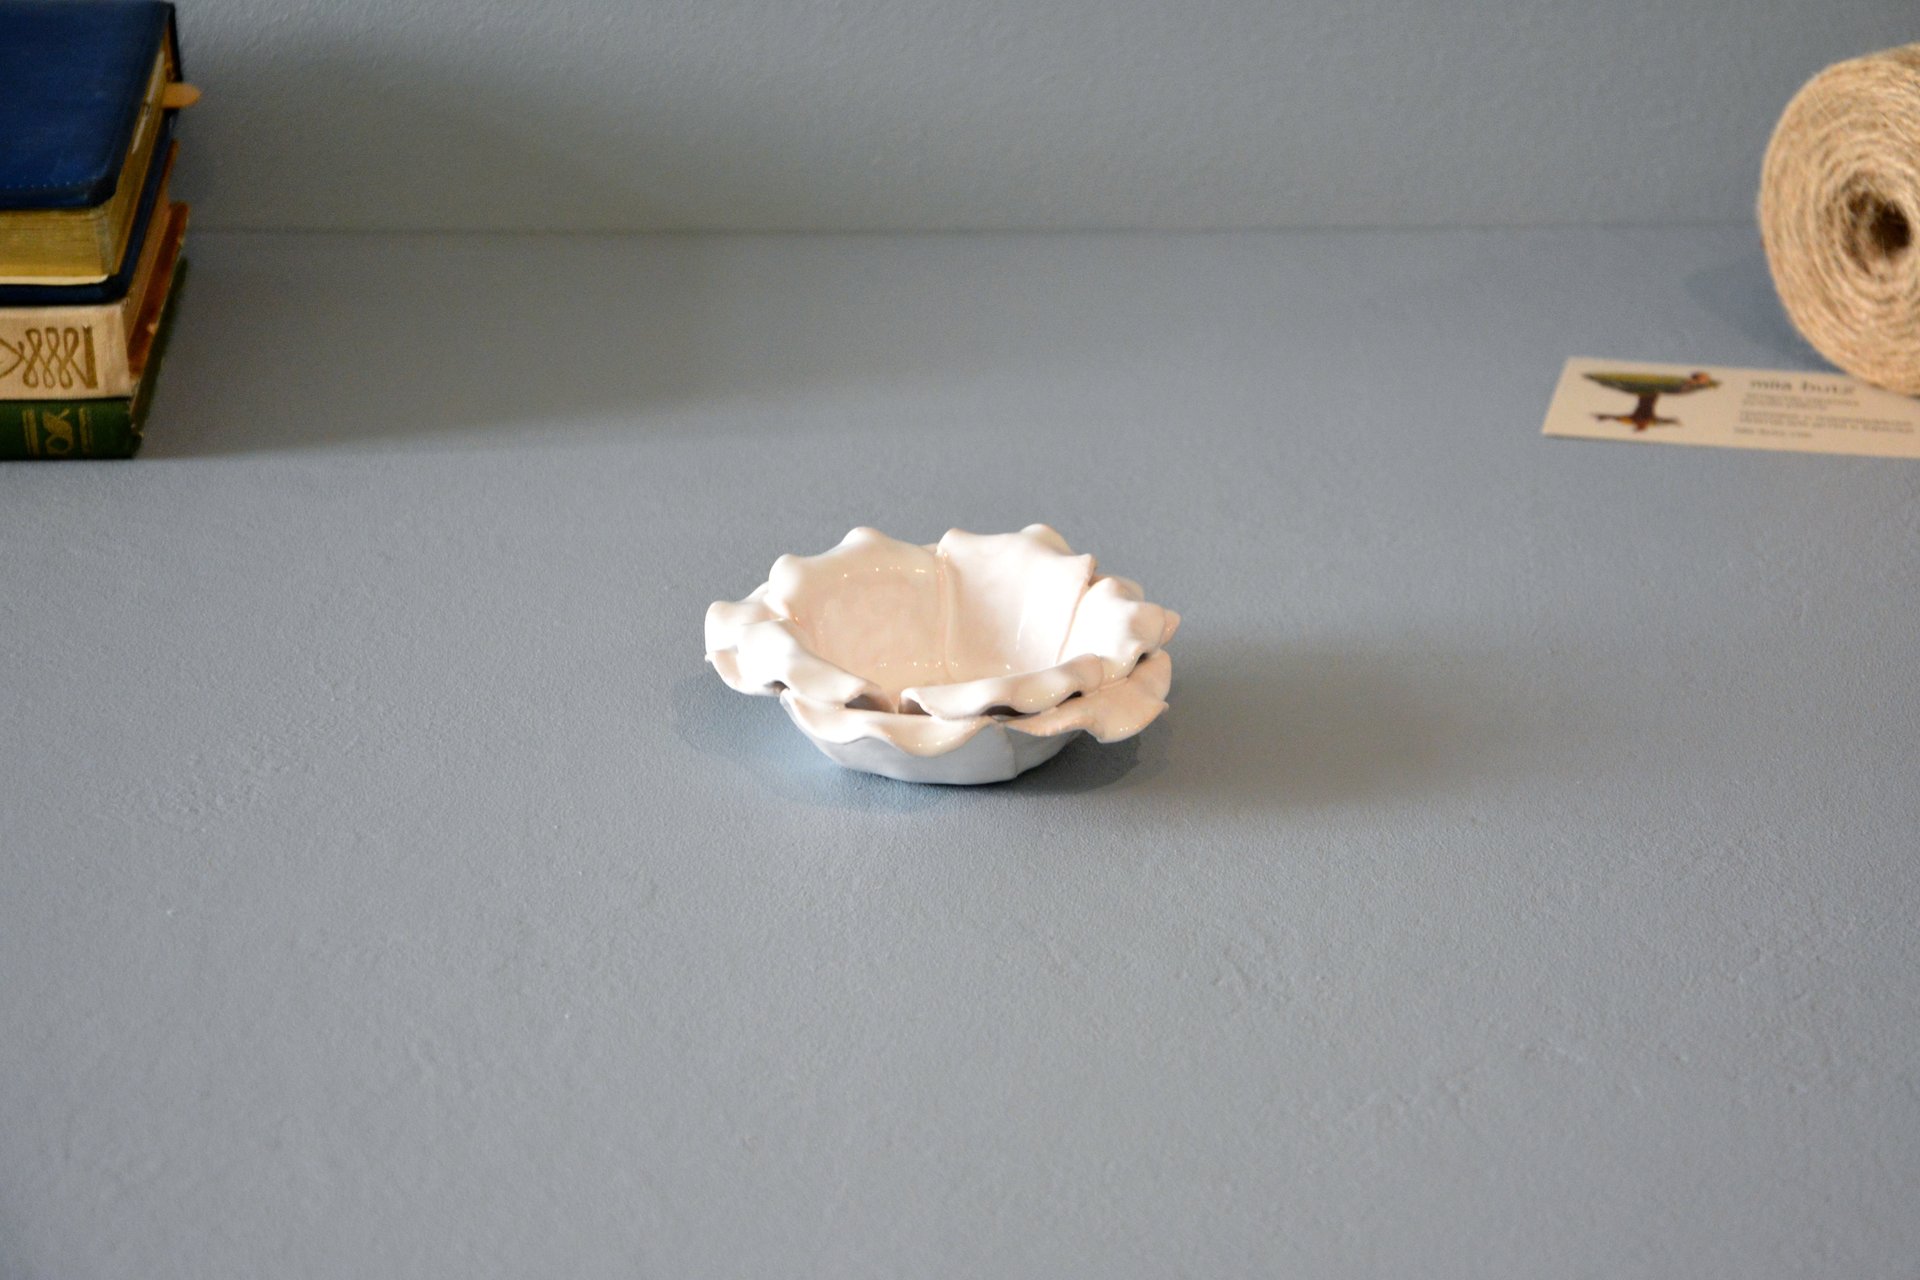 Candlestick White flower - Ceramic Candl-holders, diameter - 11.5 cm, photo 2 of 5.